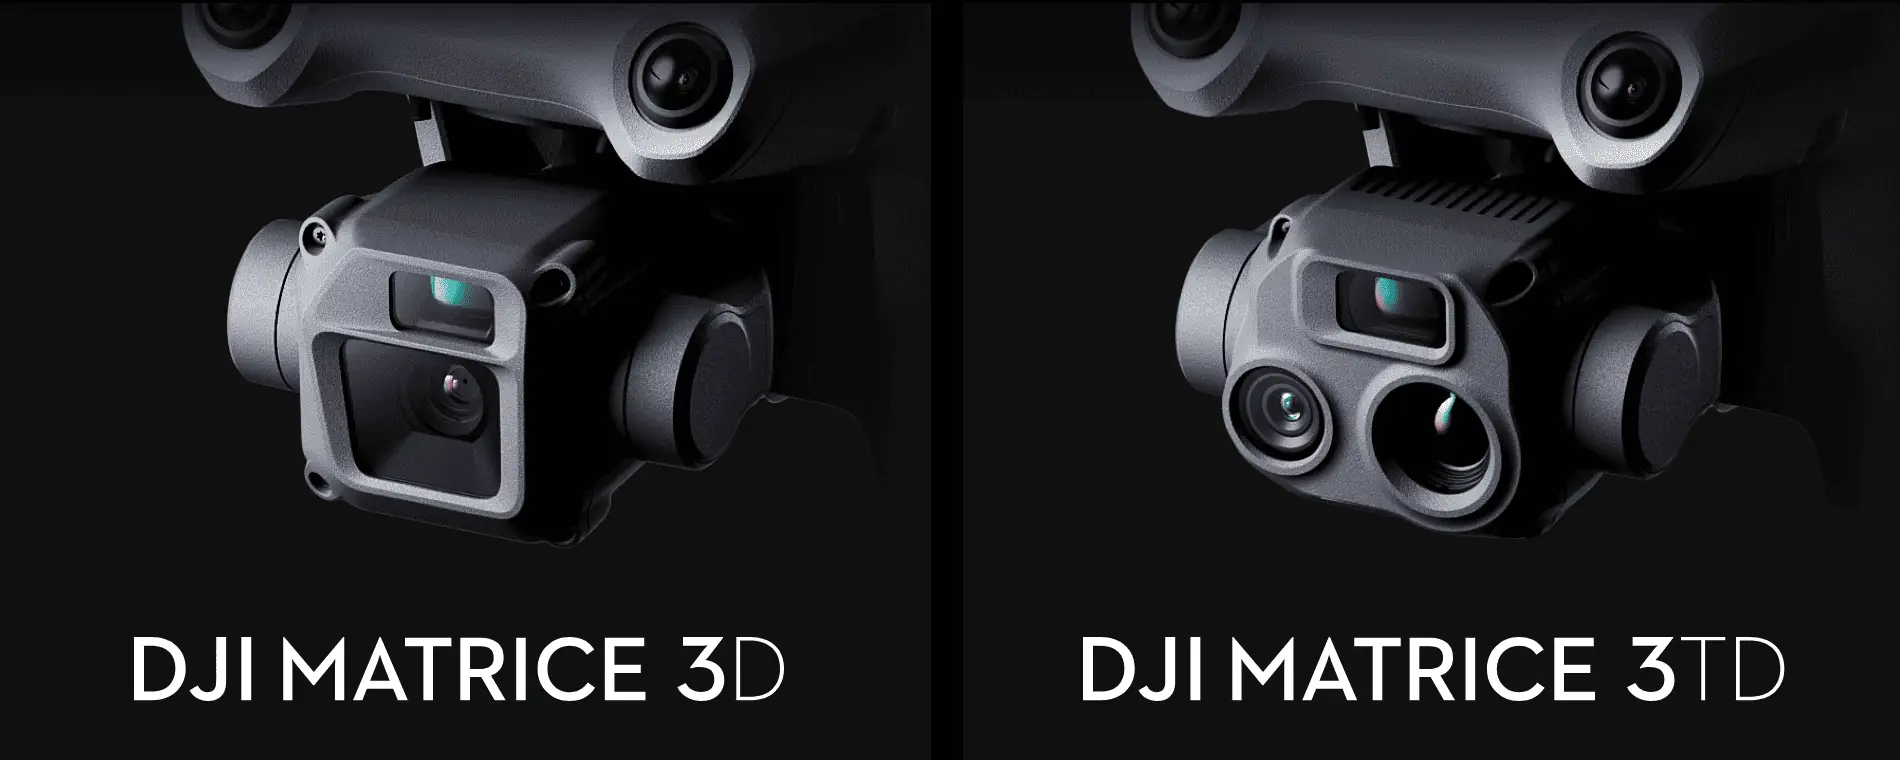 DJI Dock 2 con Matrice 3D